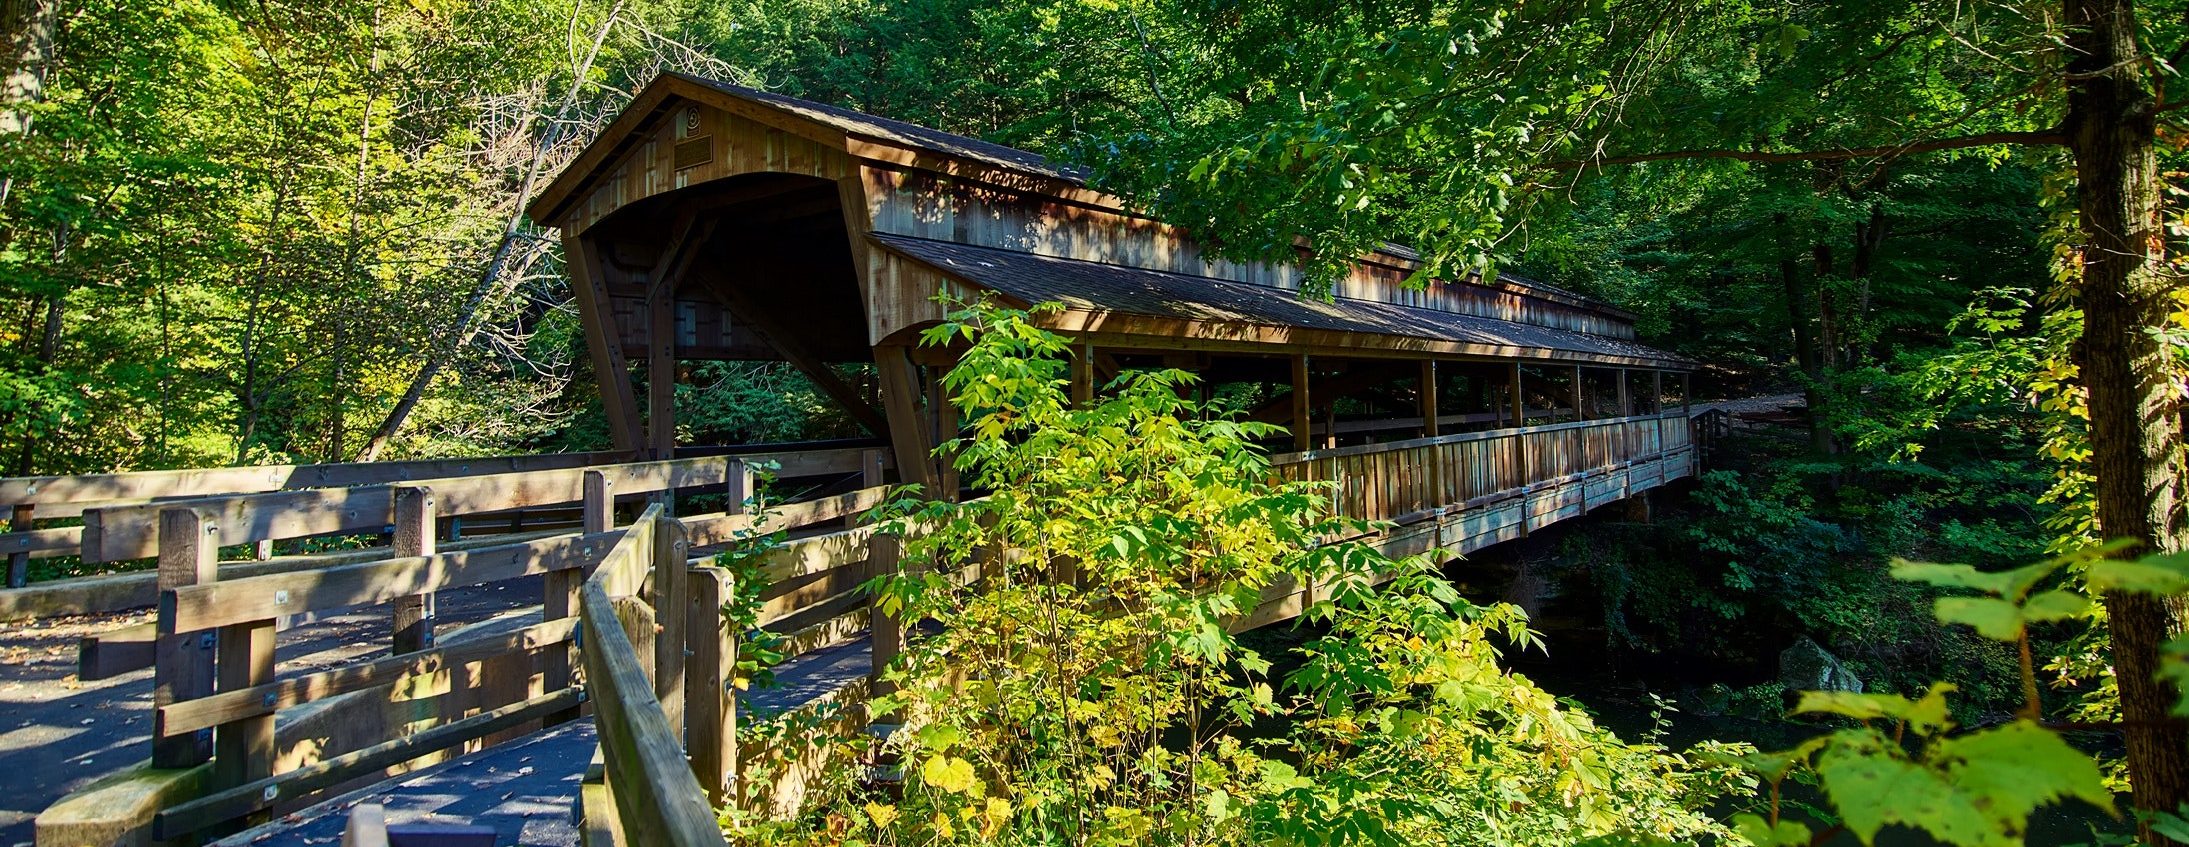 Explore hidden attractions in Hocking Hills, Ohio like a bridge trail.